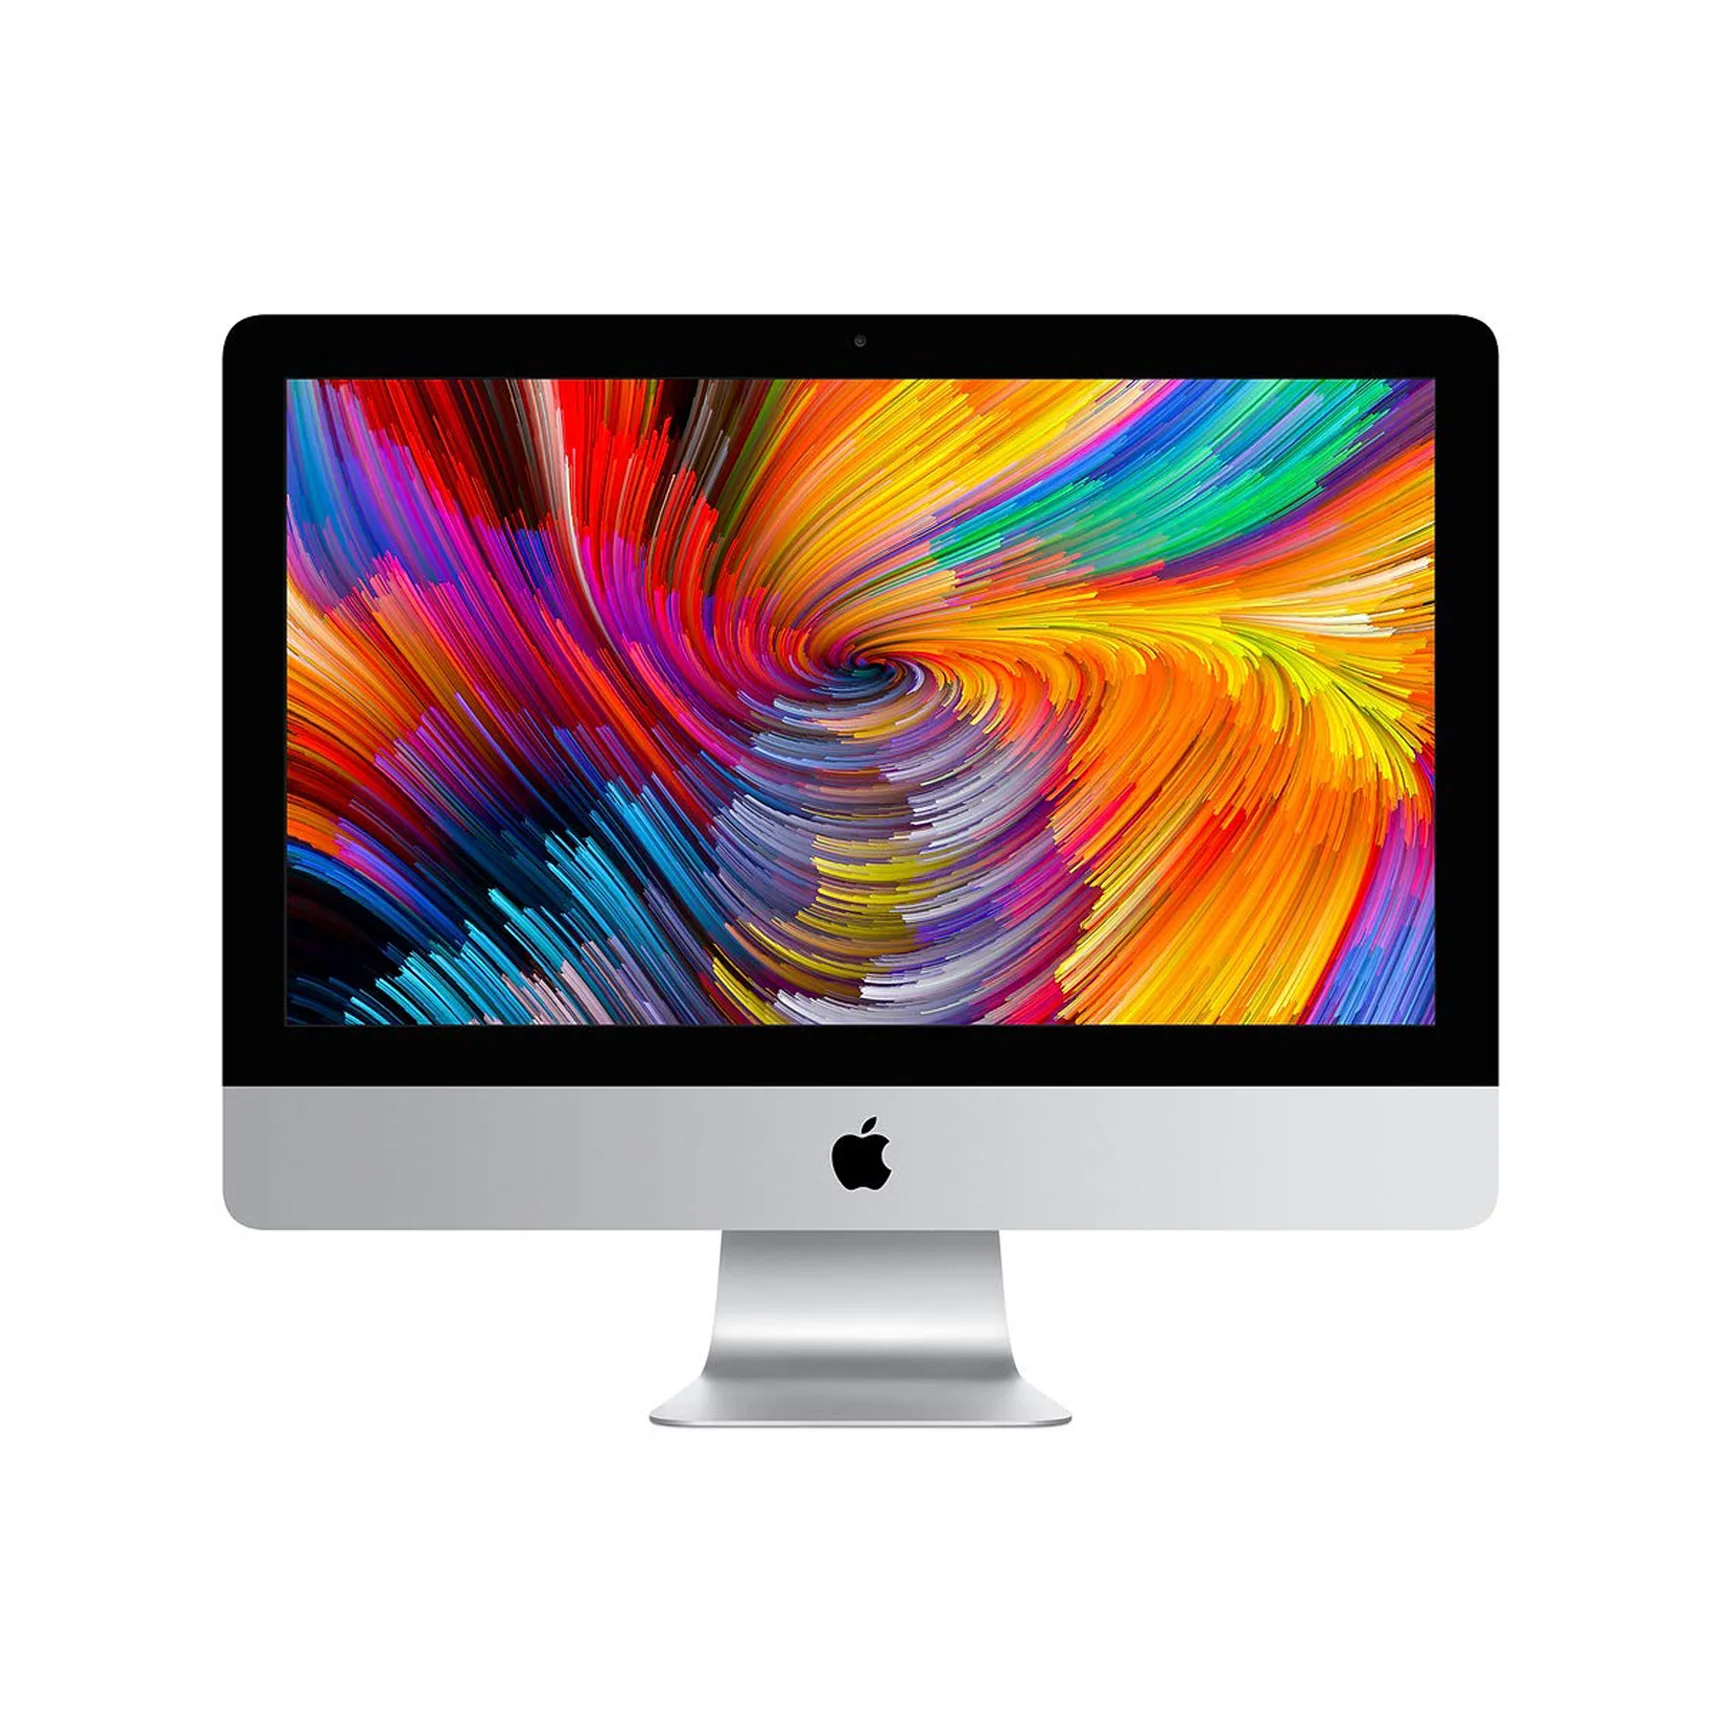  Apple iMac Retina 4K 21.5-inch (Late 2015) AIO